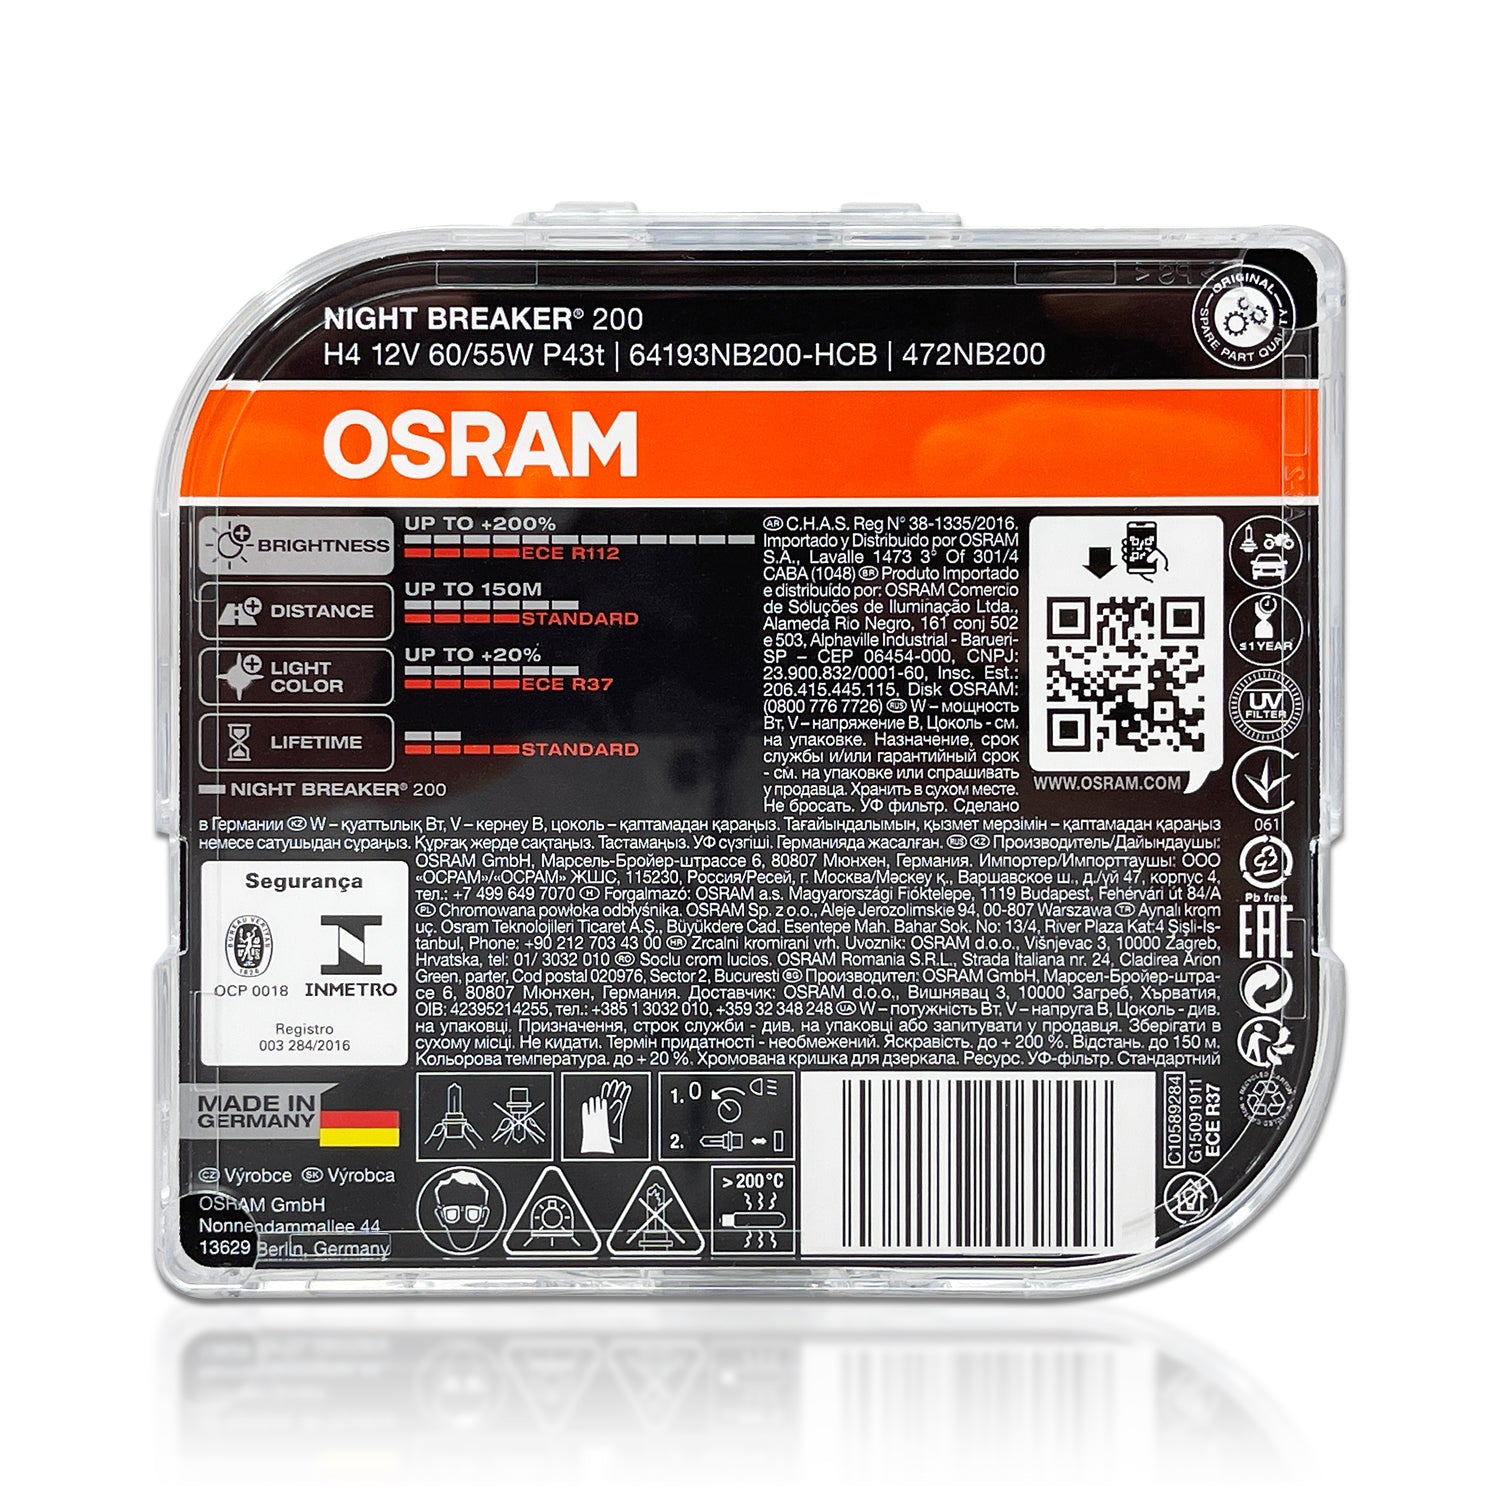 OSRAM NIGHT BREAKER 200 REVIEW + LUX TEST 